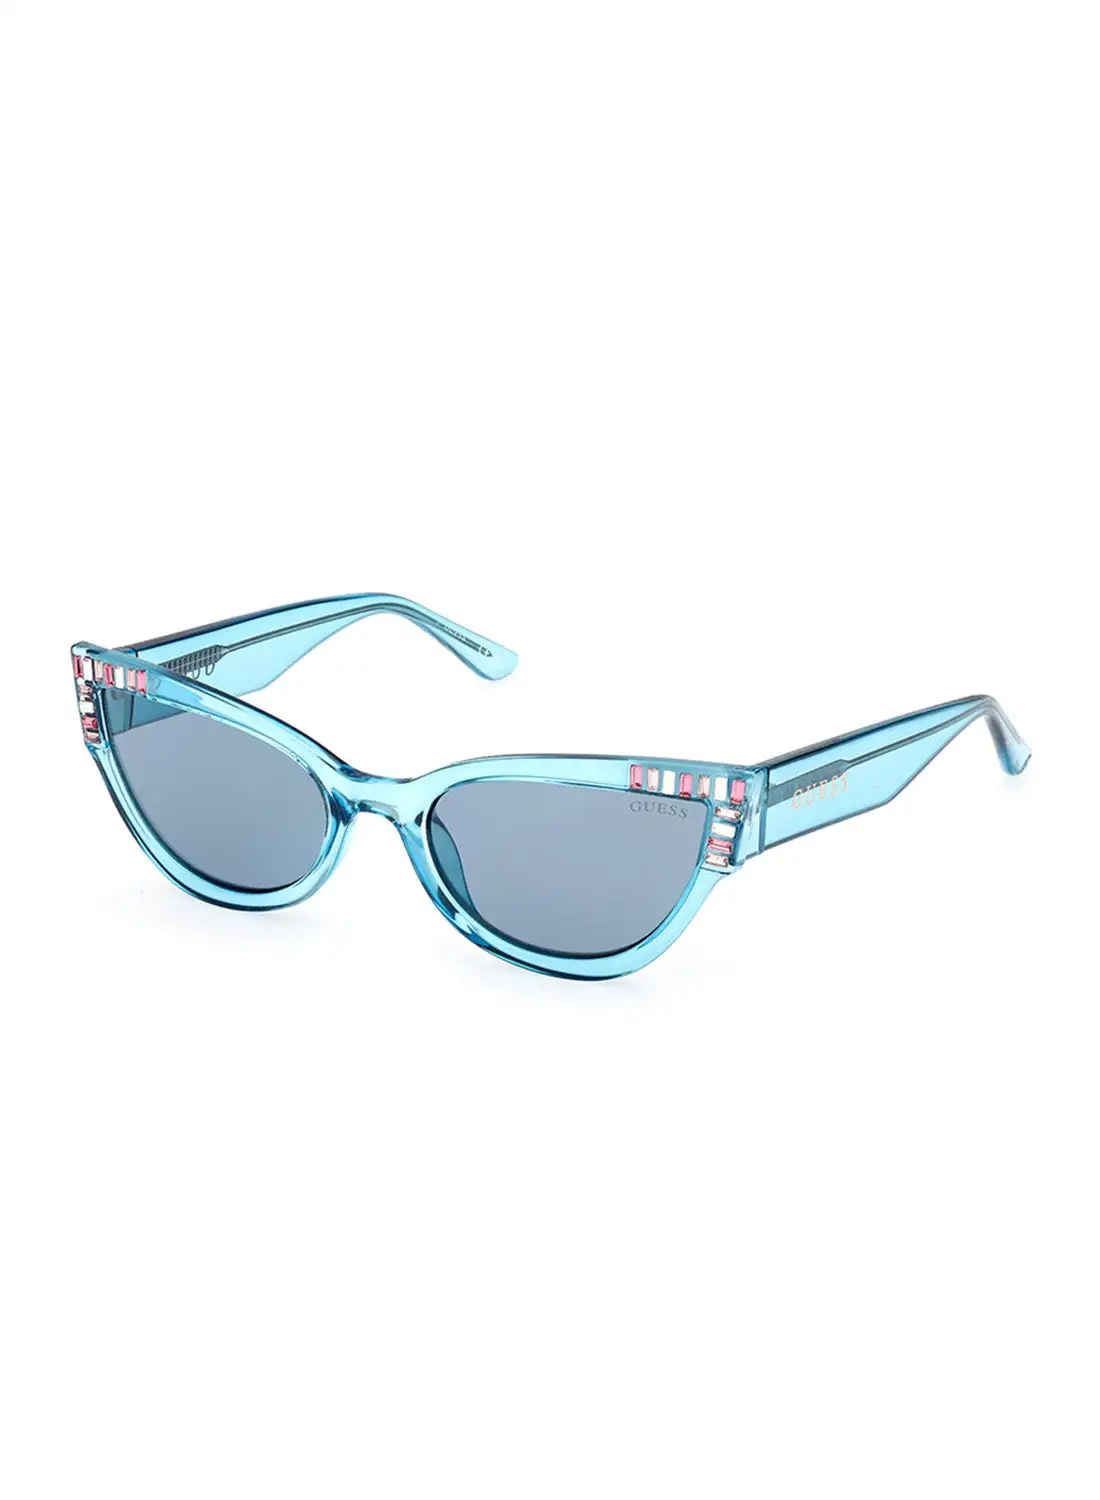 GUESS Women's UV Protection Cat Eye Shape Sunglasses - GU790189V54 - Lens Size: 54 Mm